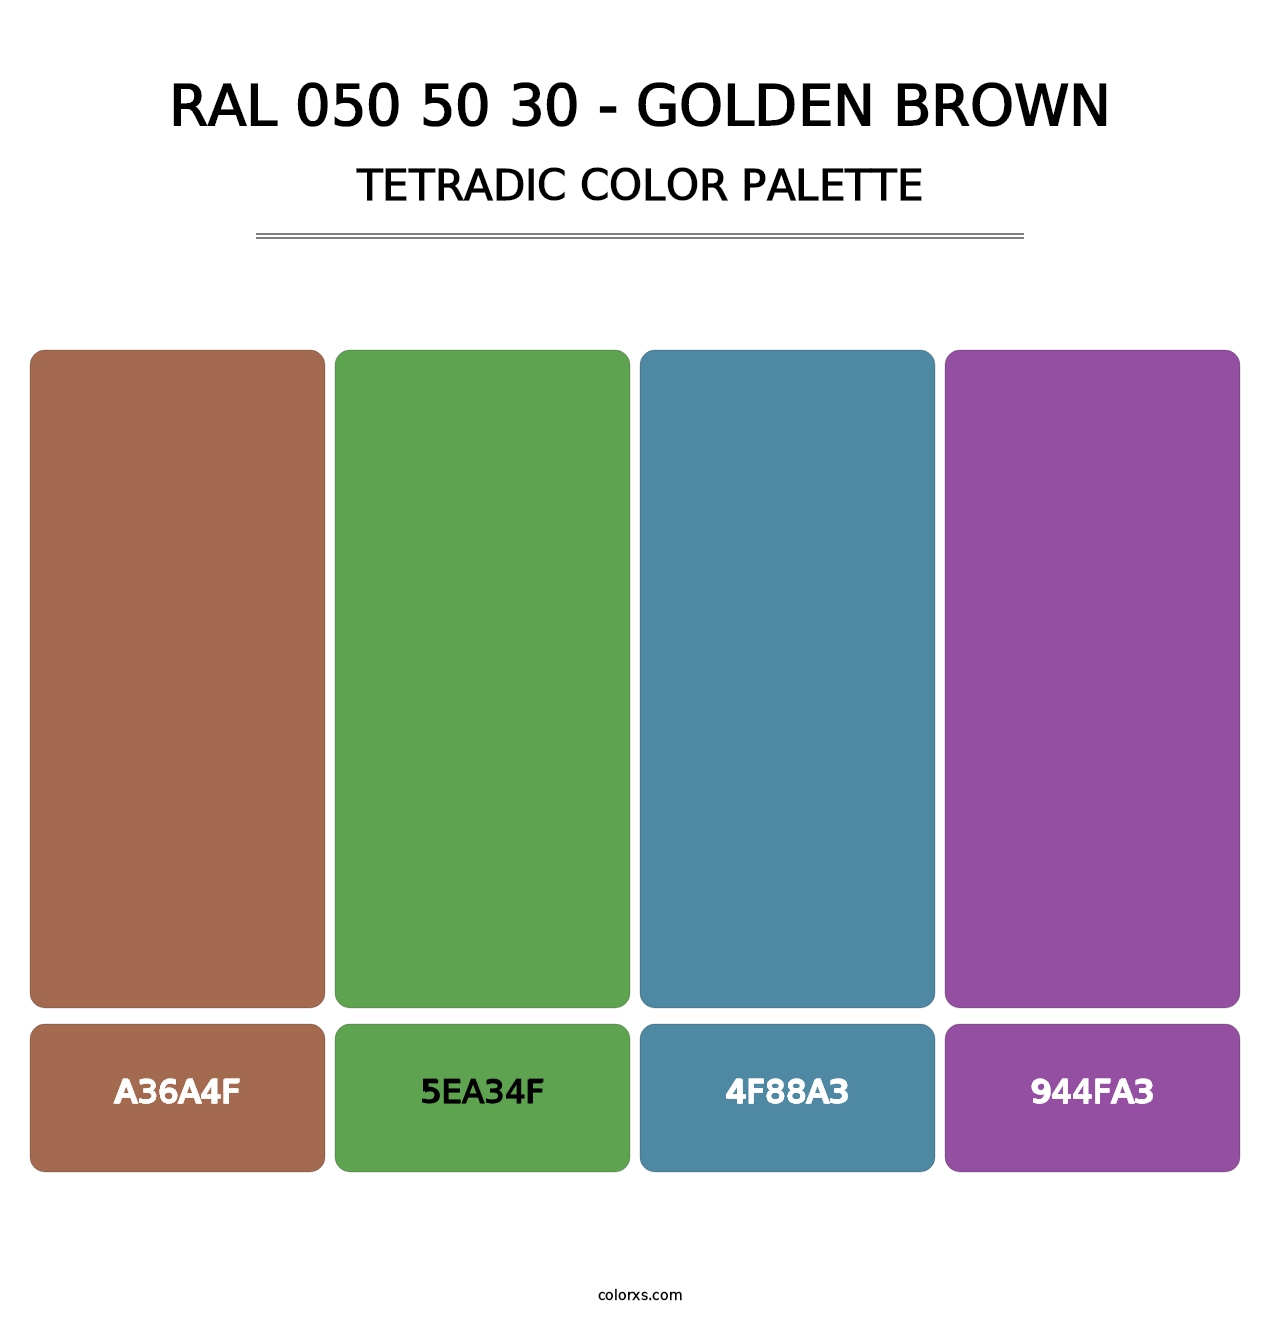 RAL 050 50 30 - Golden Brown - Tetradic Color Palette